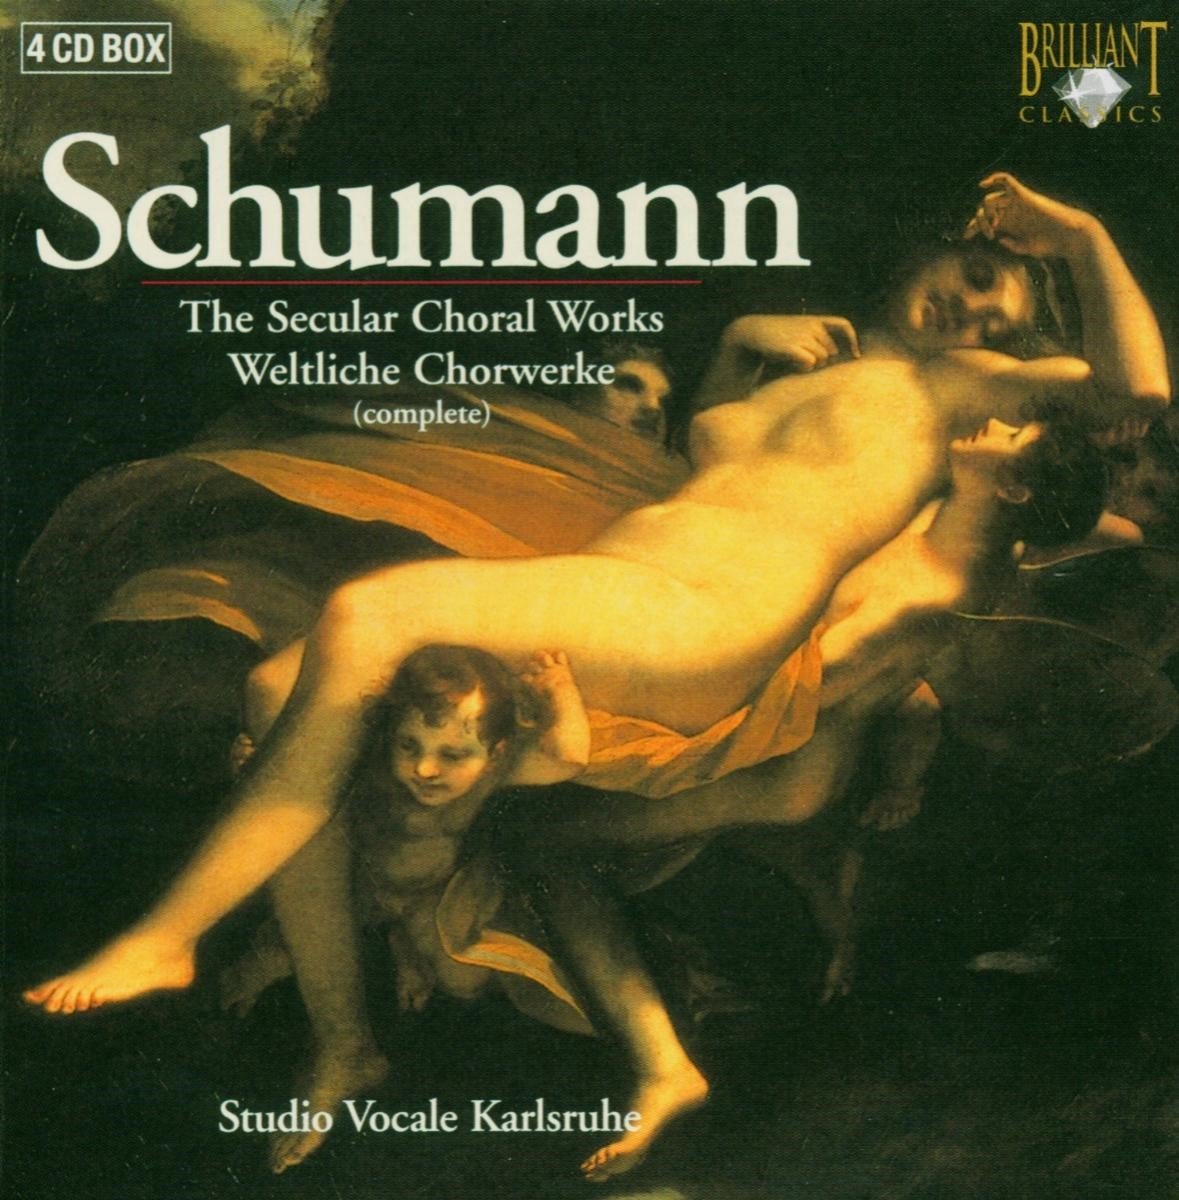 Studio Vocale Karlsruhe - Schumann: The Secular Choral Works (CD)